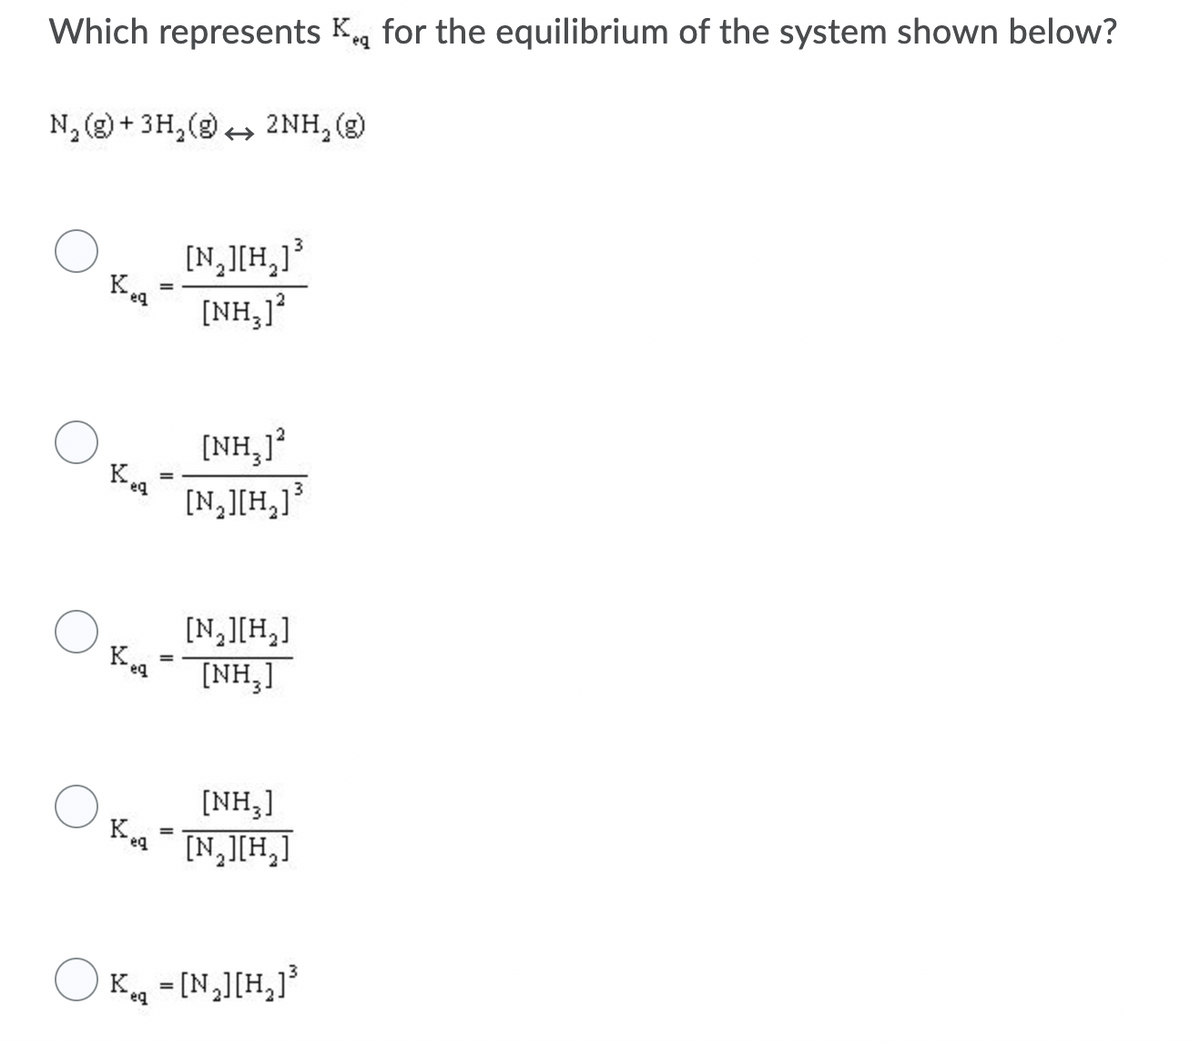 Which represents Kg for the equilibrium of the system shown below?
N, (2) + 3H, (9) + 2NH,(g)
[N,[H,]°
[NH,]
[NH,1?
Kea
[N,][H,]³
[N,][H,]
K.
[NH,]
eq
[NH,]
[N,JIH,]
eg
O K =[N,][H,]³
eq
